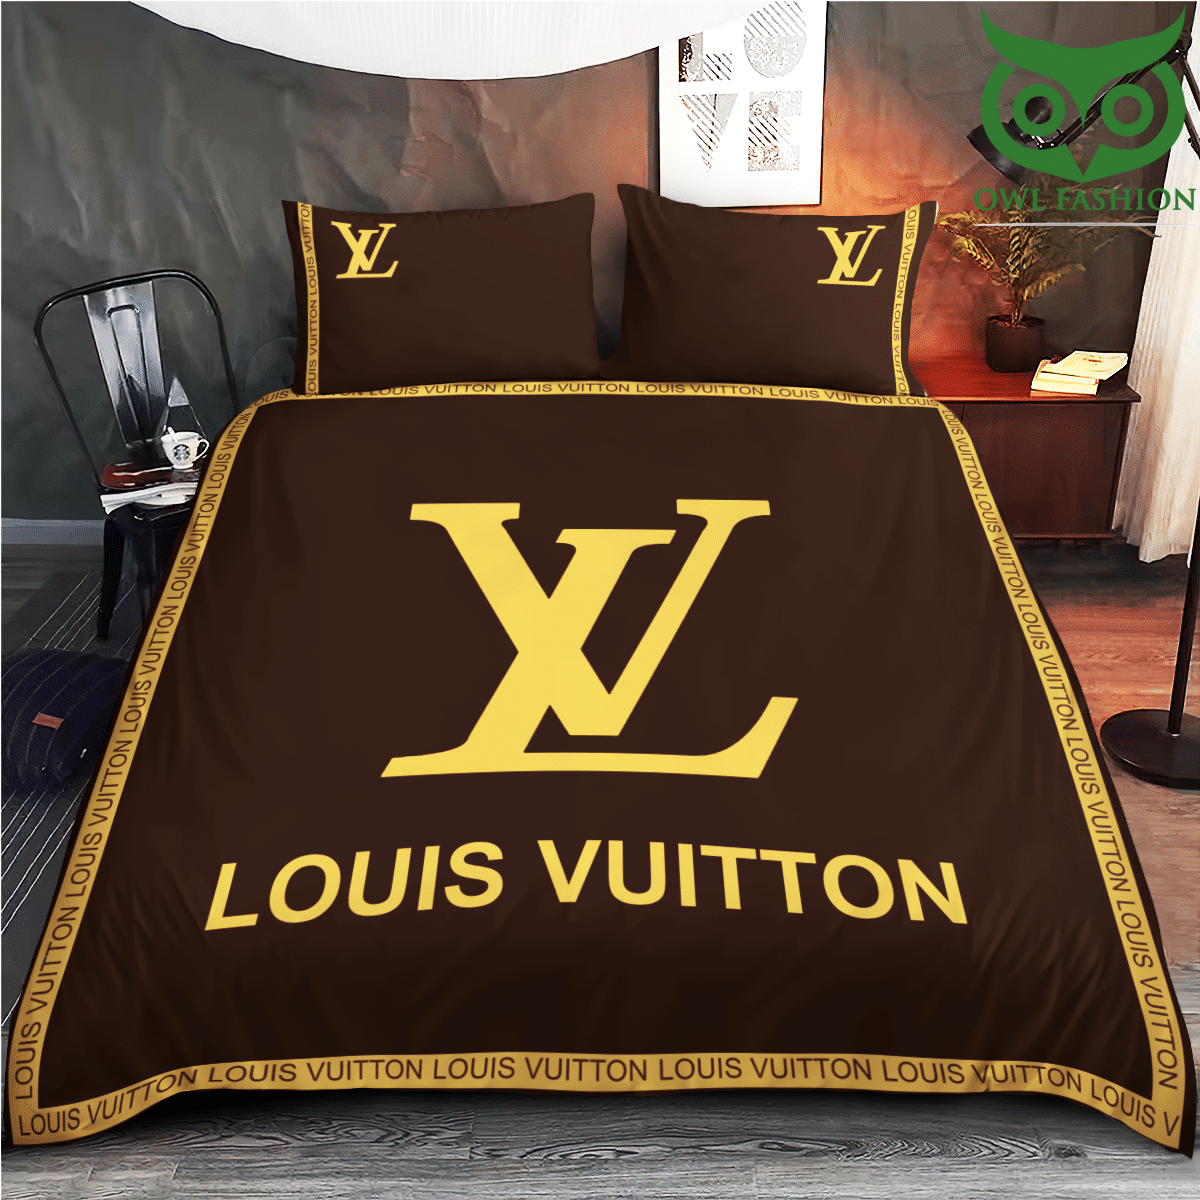 Brown Louis Vuitton logo bedding set